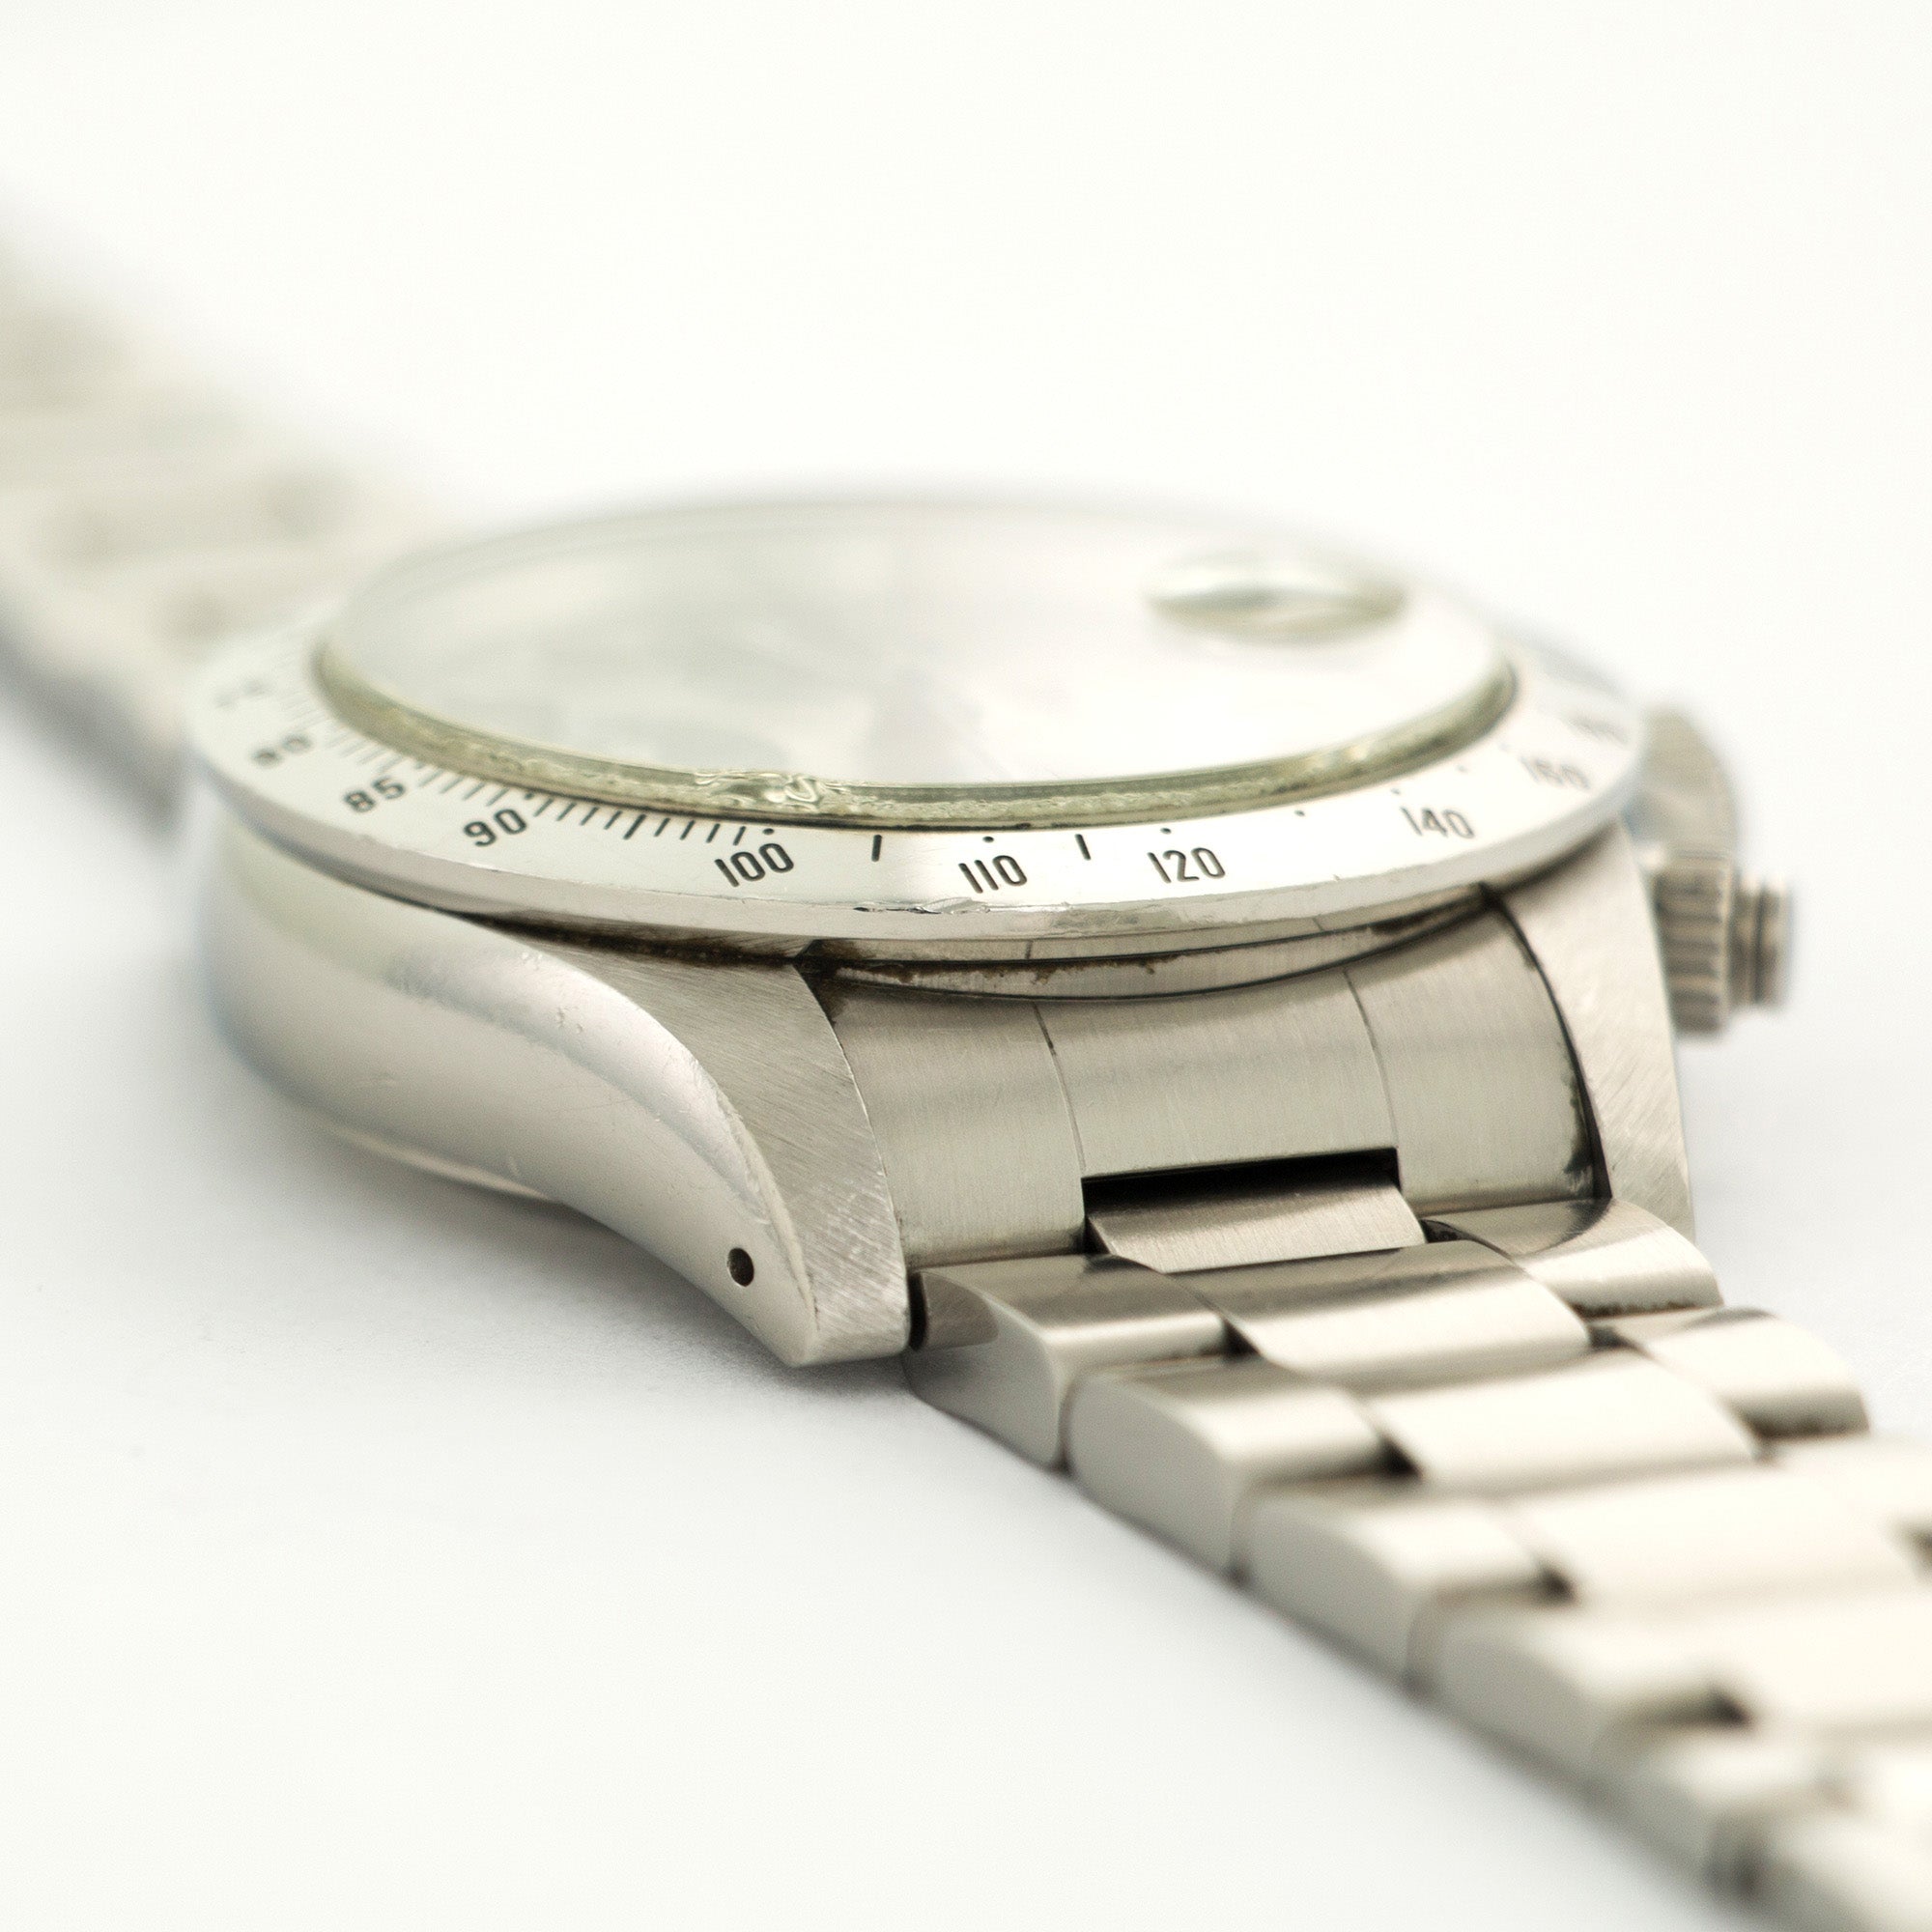 Tudor - Tudor Steel Prince Date Chrono Watch, ref. 79280 with Original Bucherer Papers - The Keystone Watches